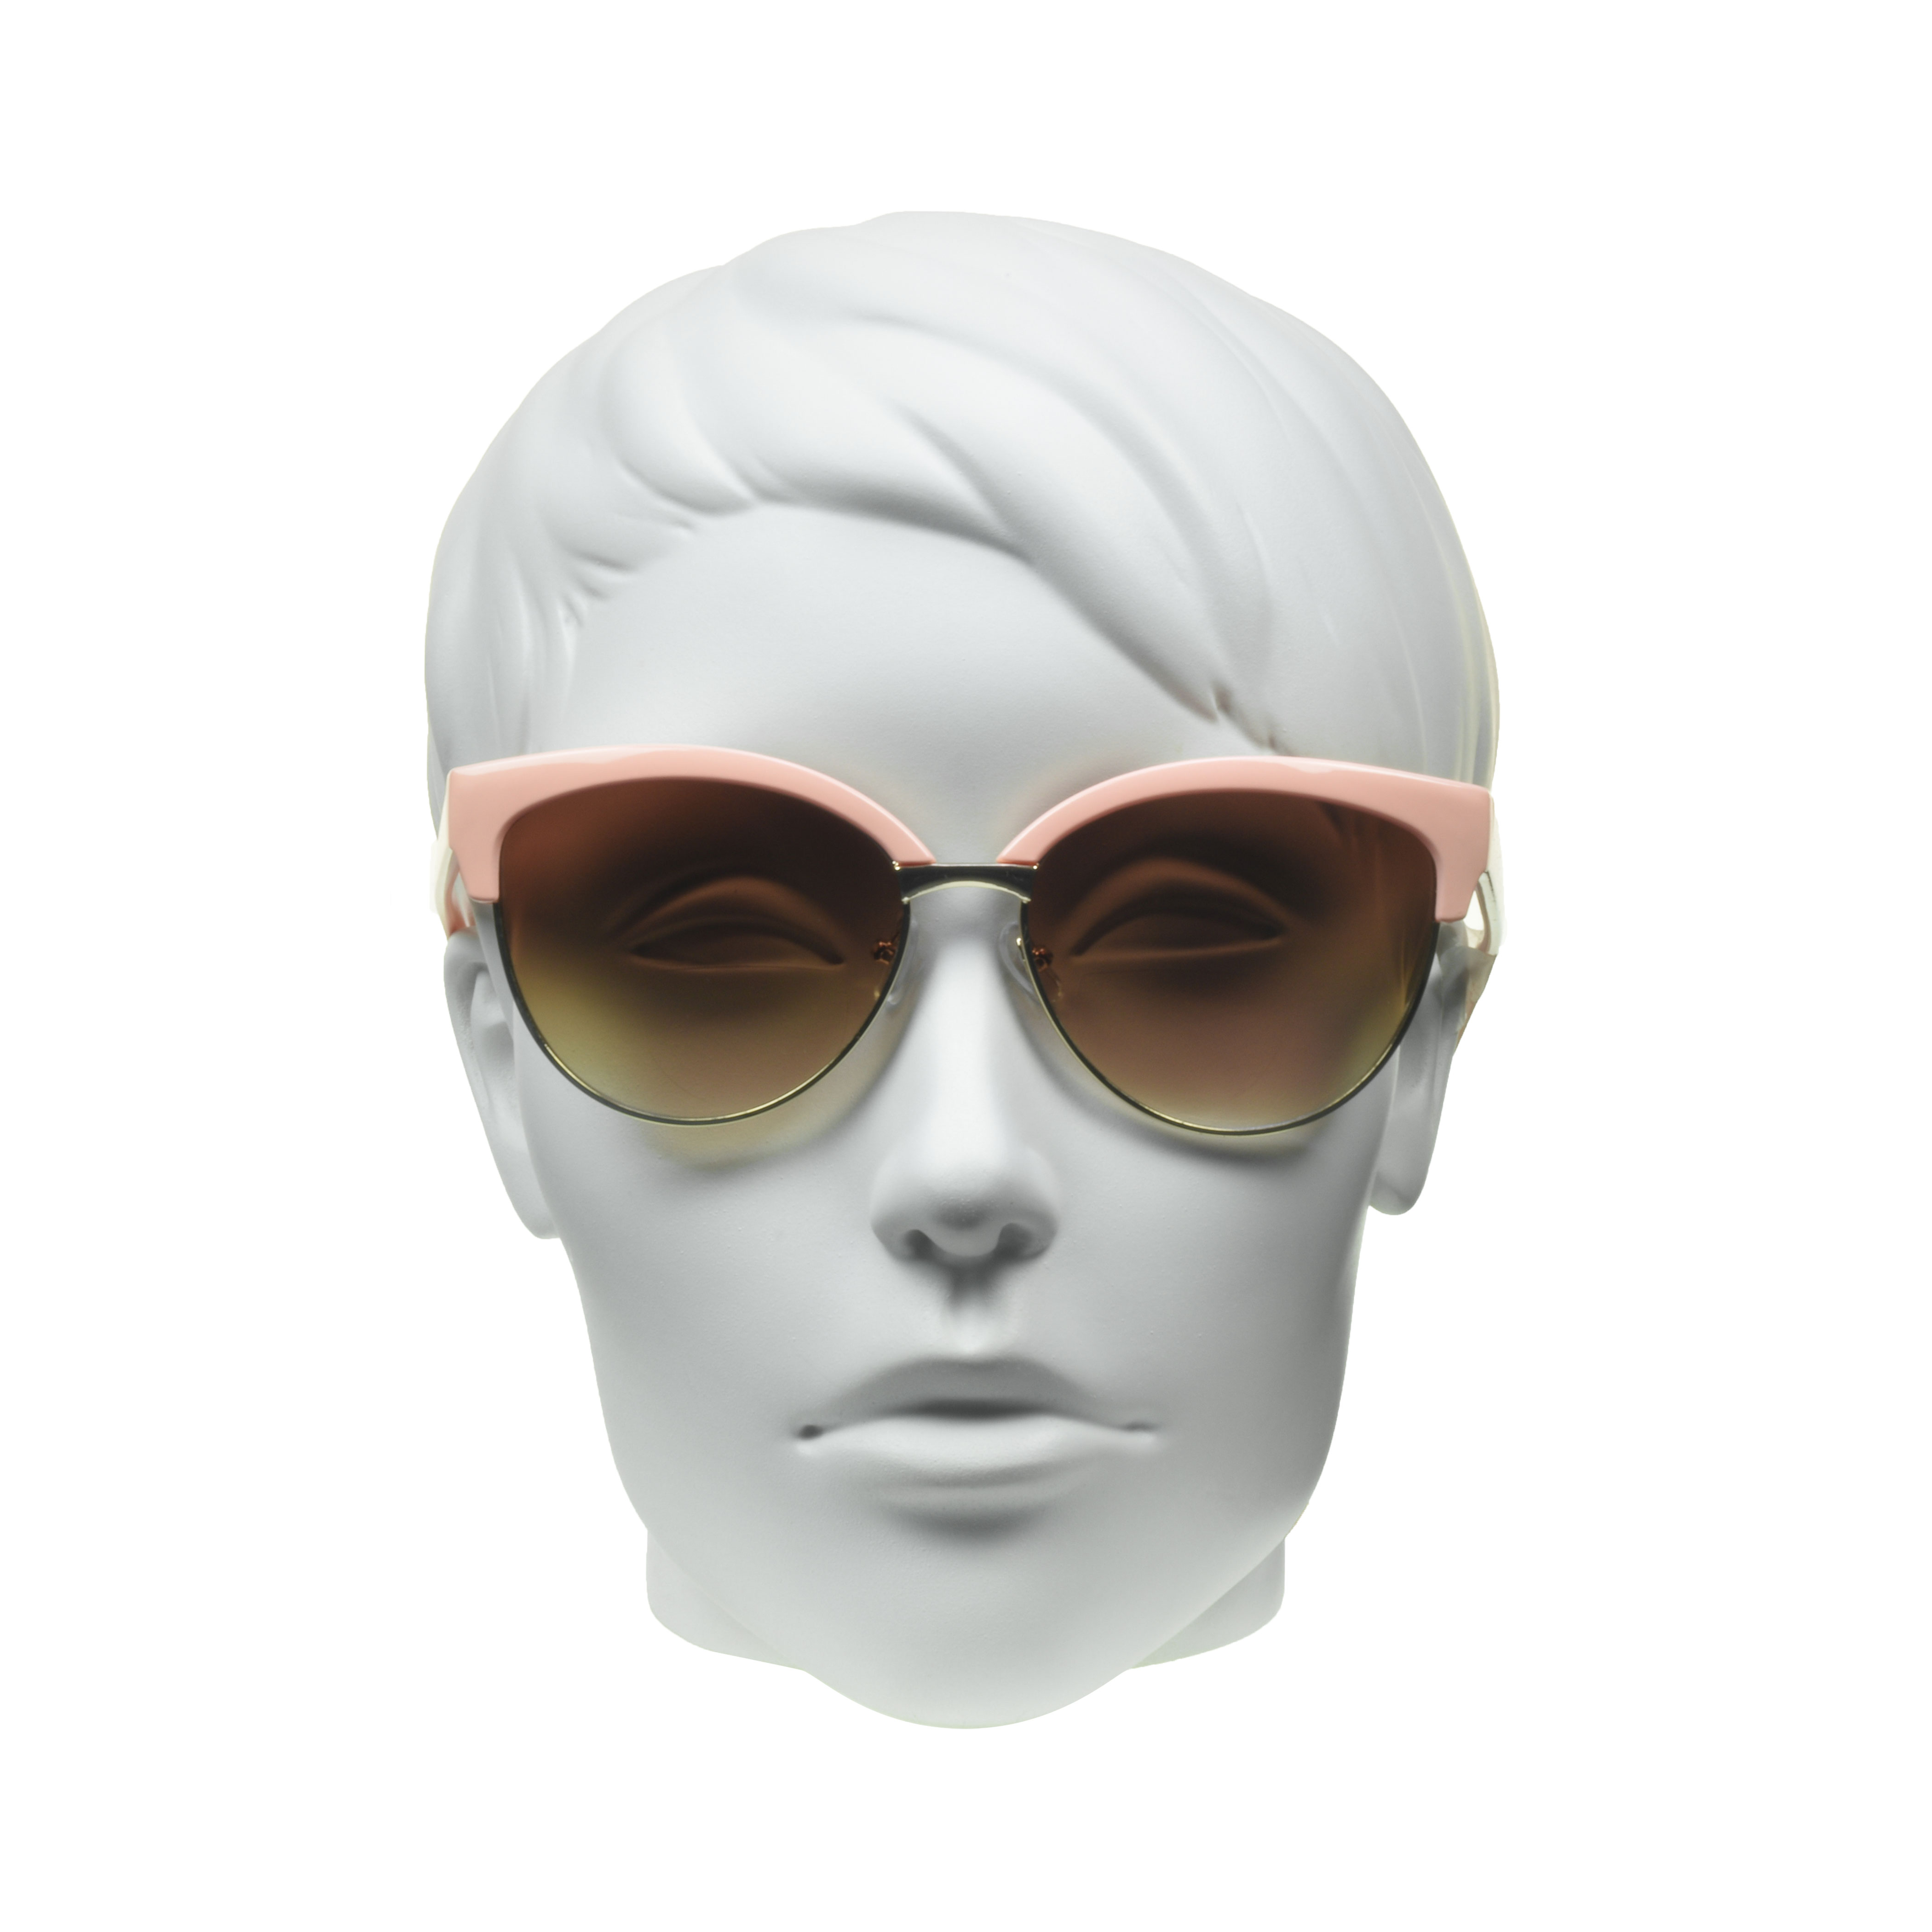 proSPORT Women Bifocal Reading Cateye Fashion Horn Rim Sunglasses Pink Gold Frame Brown Lens +1.00 - image 3 of 5